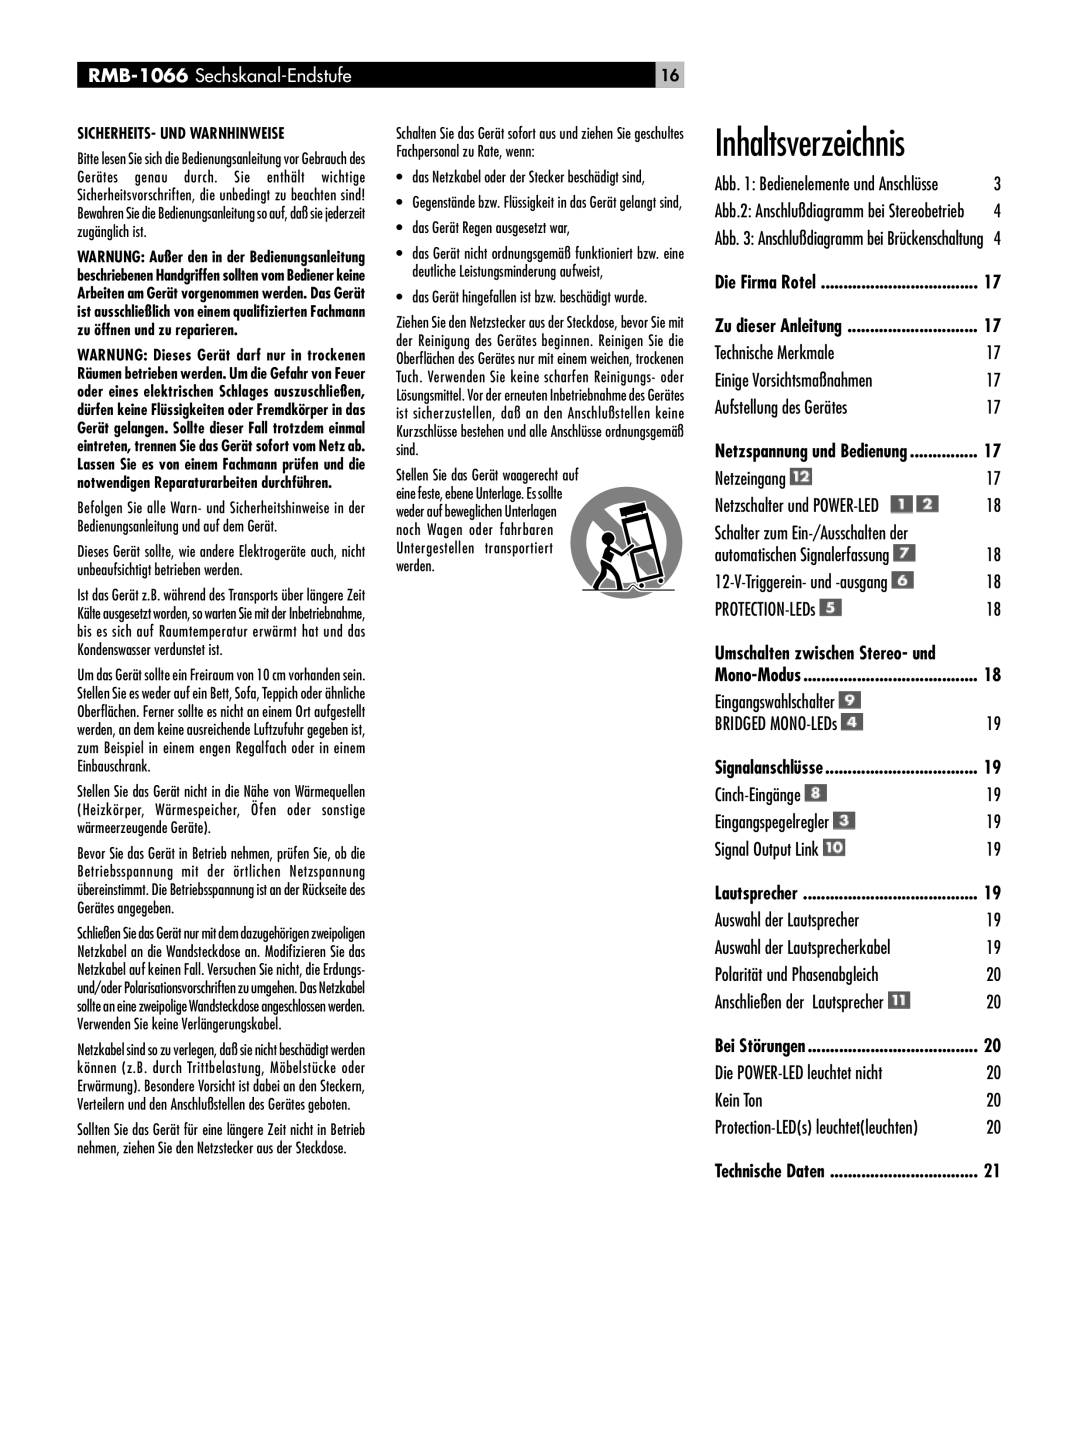 Rotel owner manual Inhaltsverzeichnis, RMB-1066 Sechskanal-Endstufe 